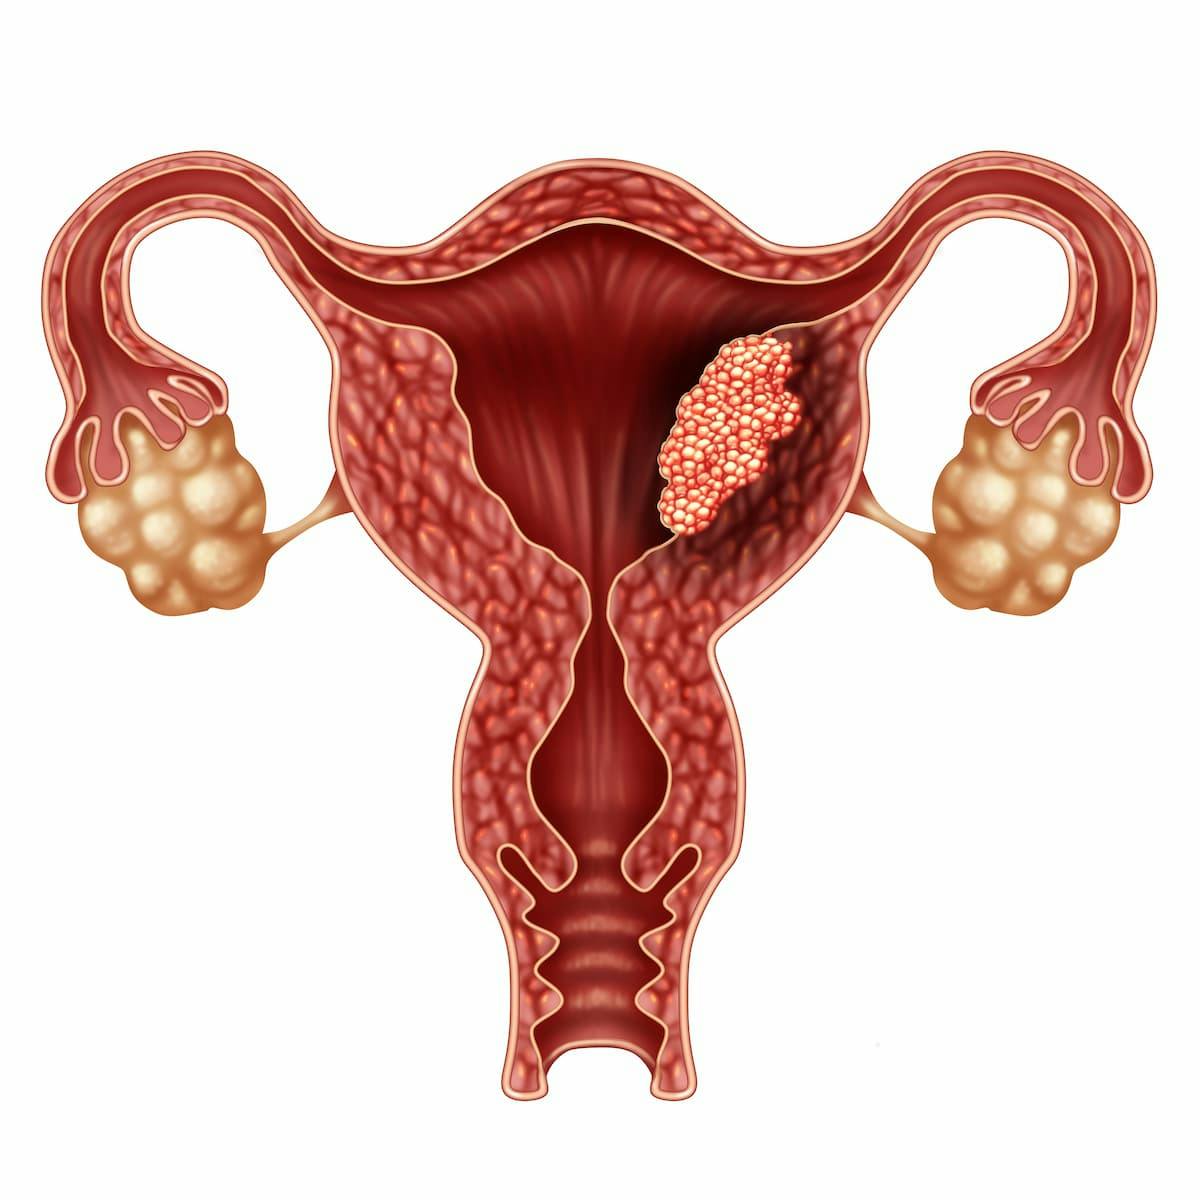 Durvalumab Combo Yields Survival Benefit in Advanced Endometrial Cancer | Image Credit: © freshidea - stock.adobe.com.